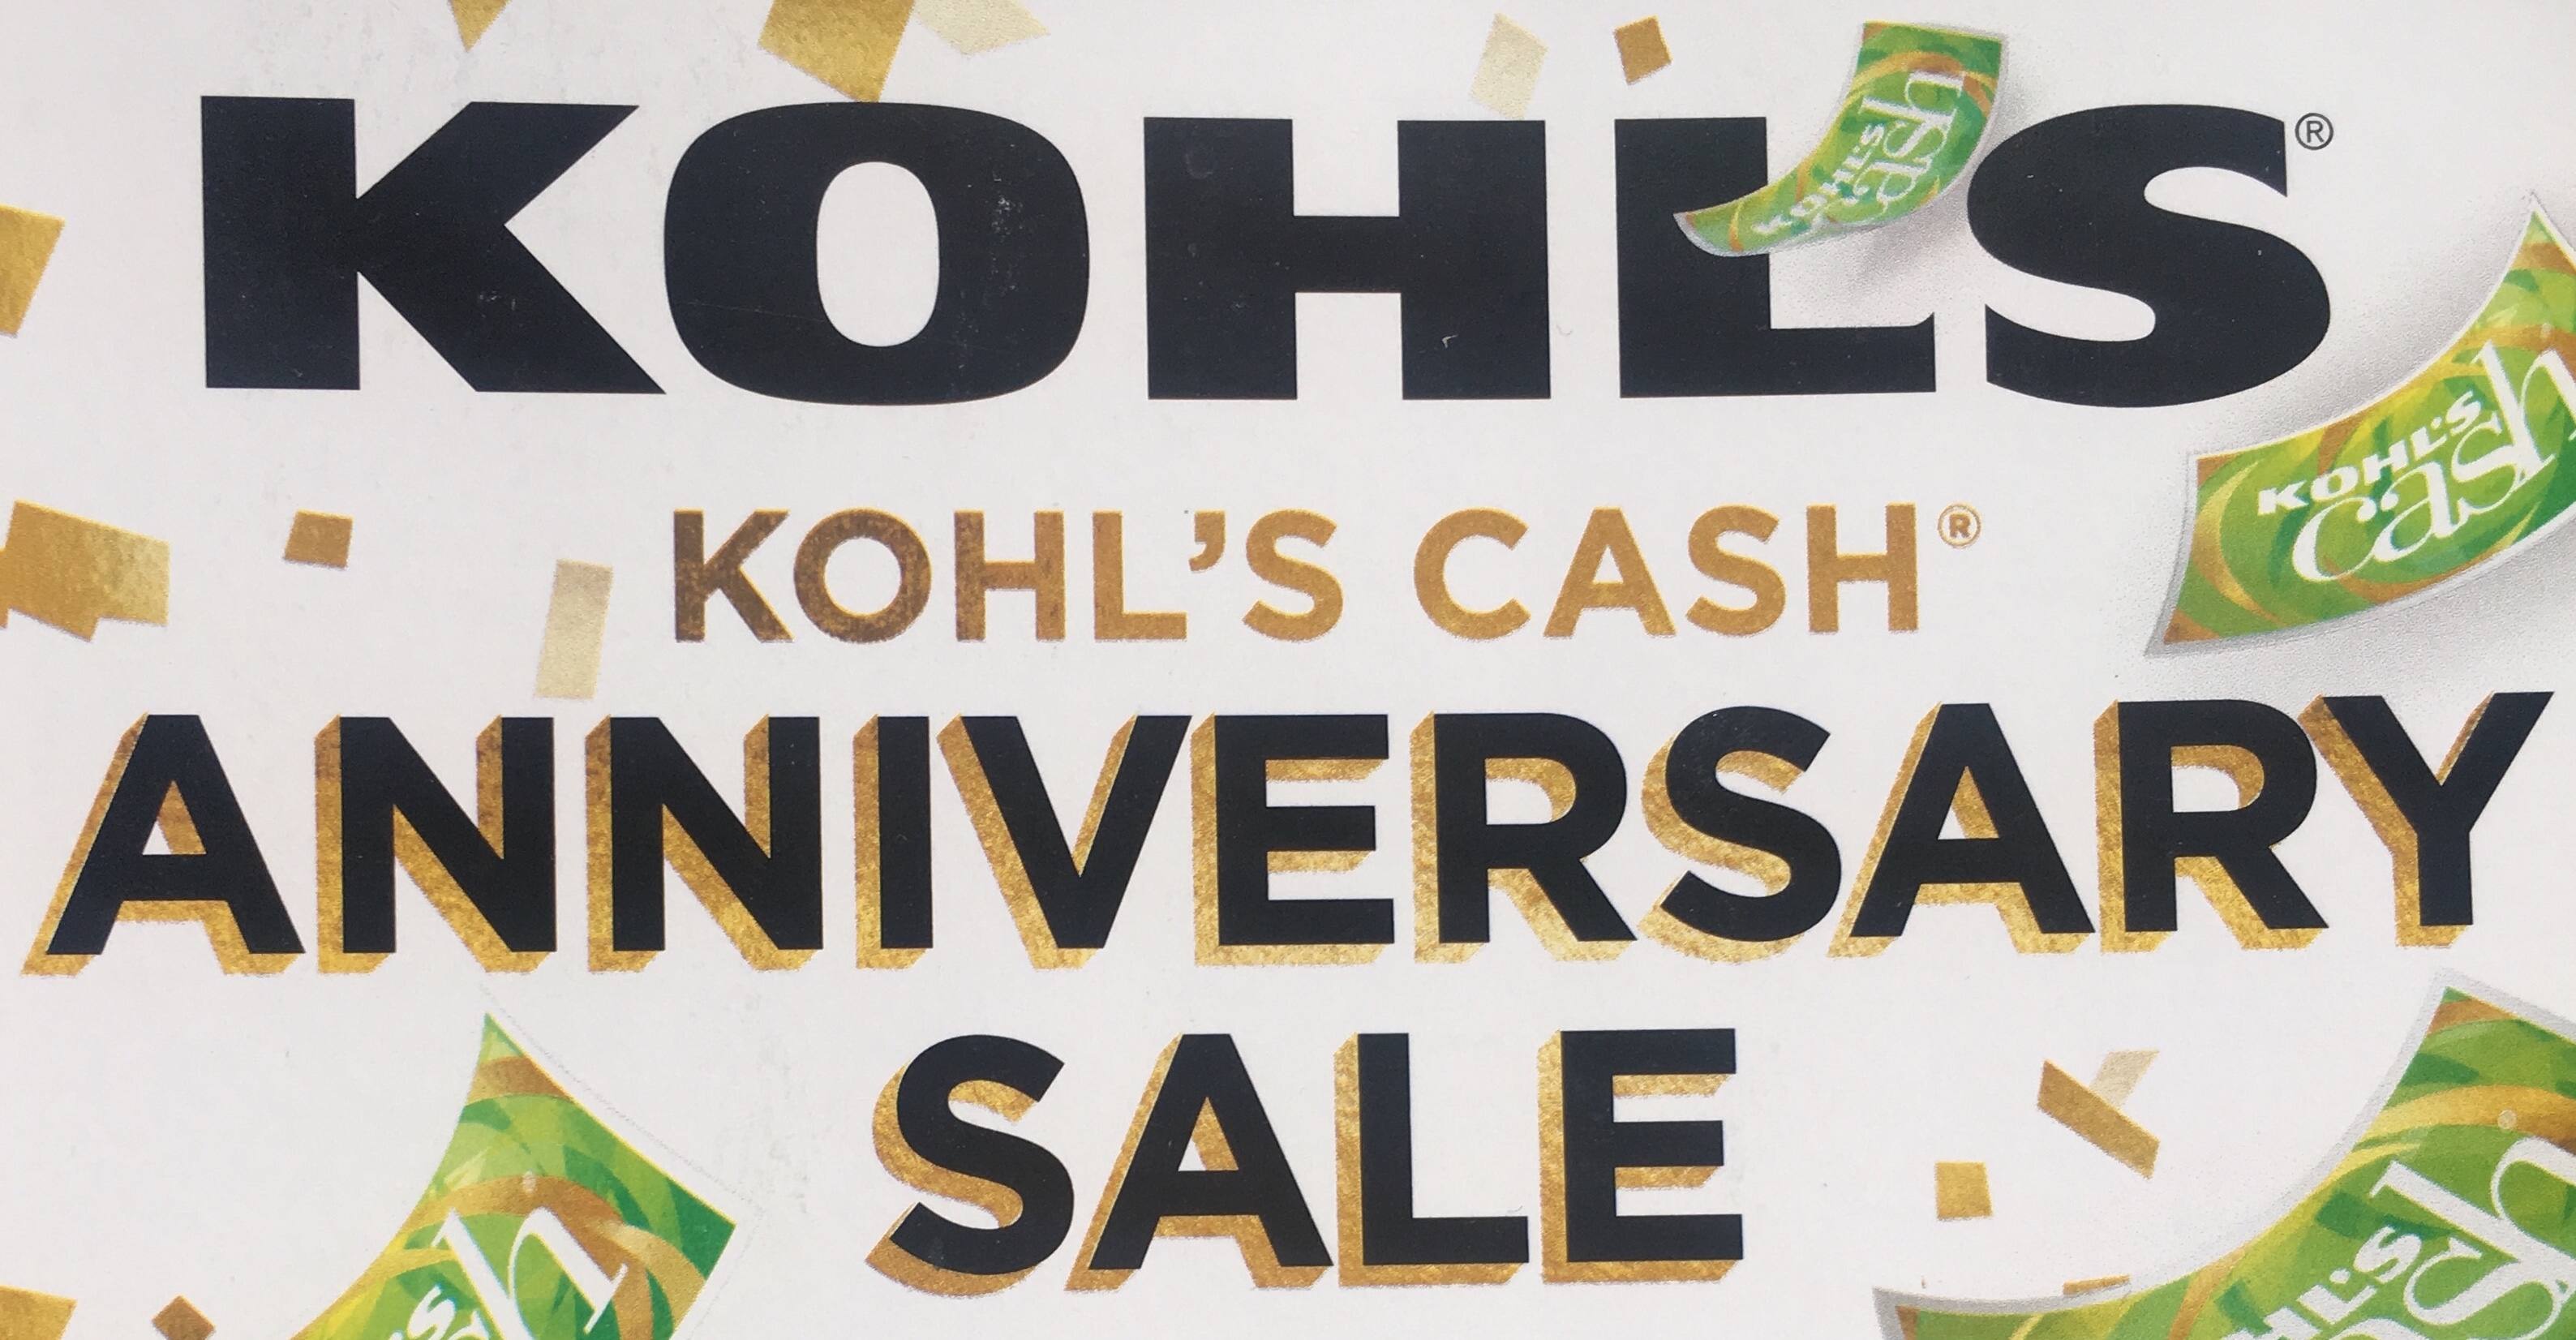 Kohl's Cash Anniversary Sale